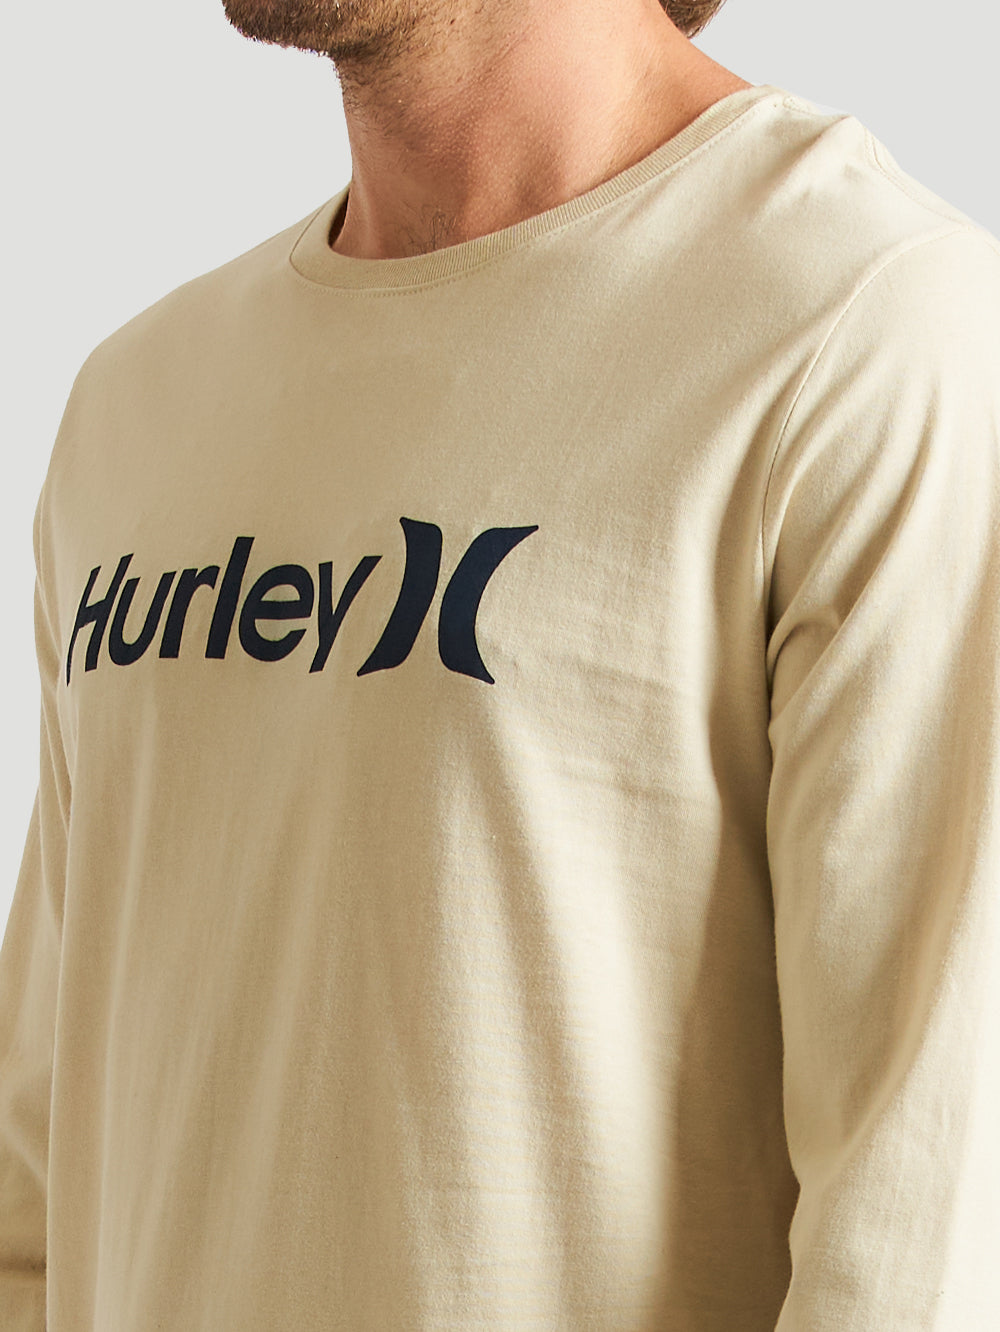 Camiseta Manga Longa Hurley O&O Solid Areia